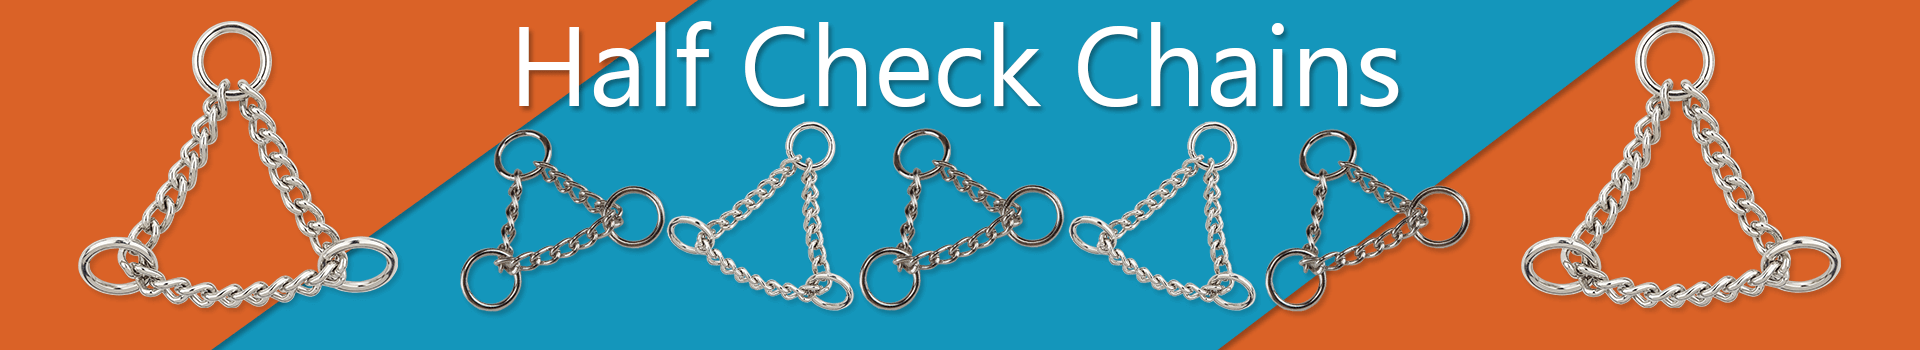 Half Check Chains